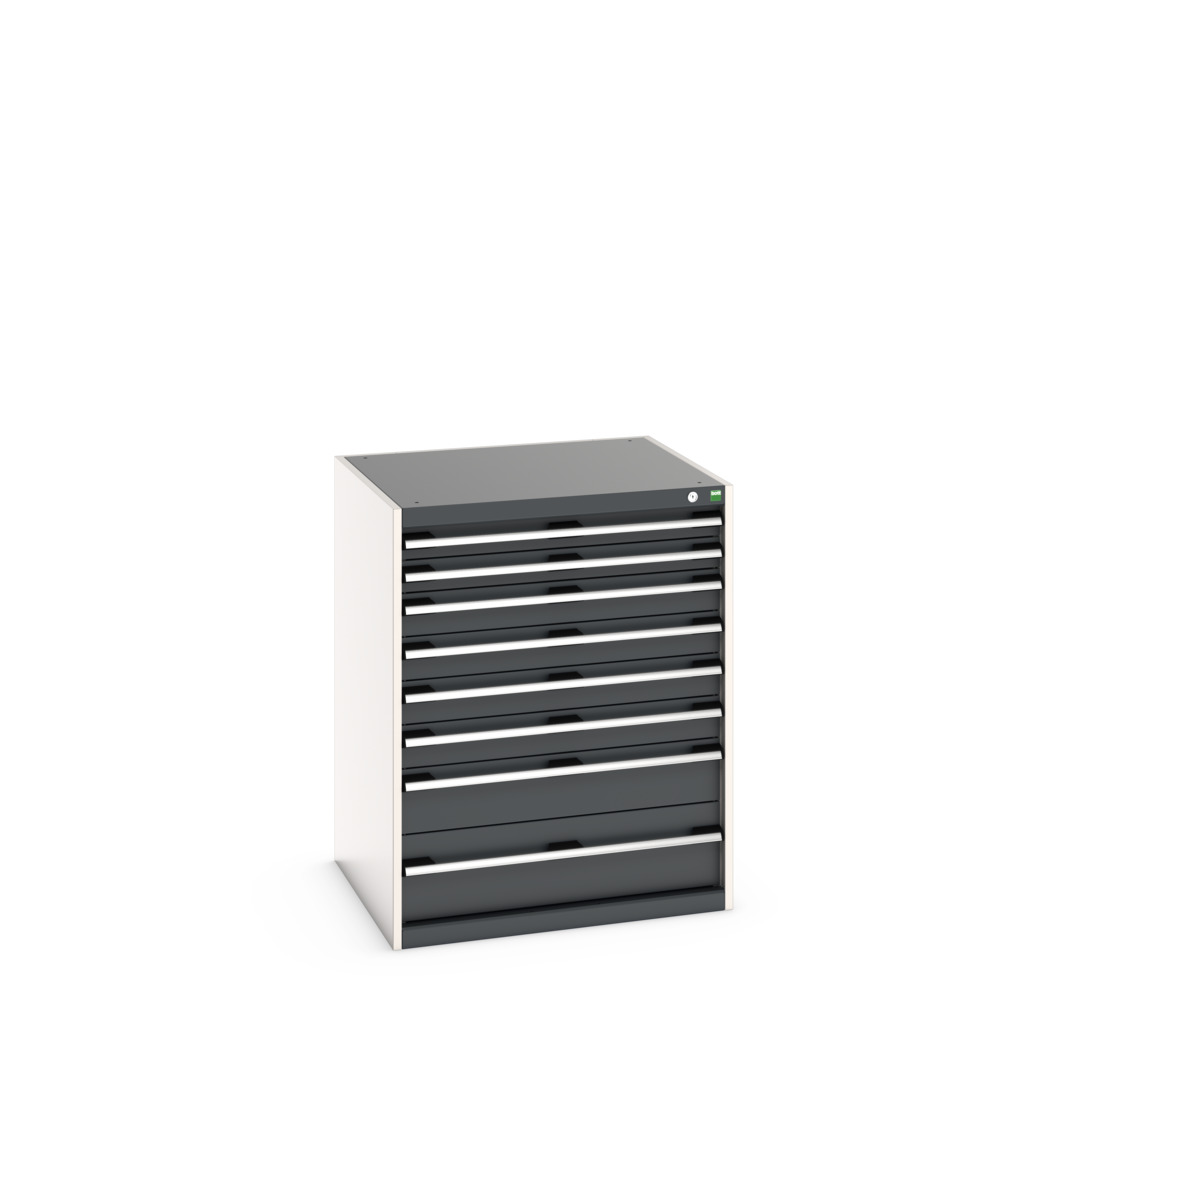 40028029. - cubio drawer cabinet 